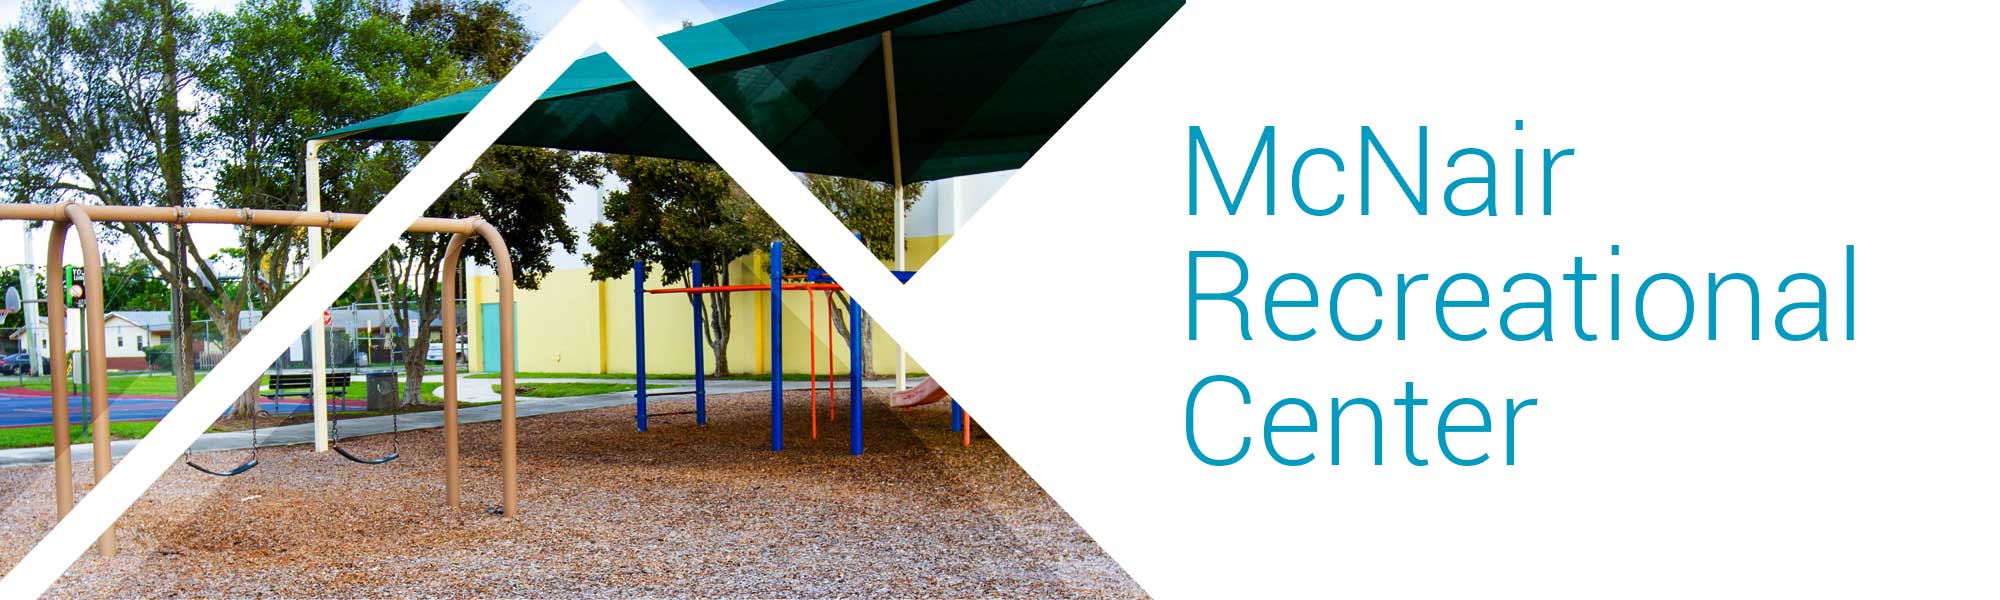 Mcnair Recreation Center